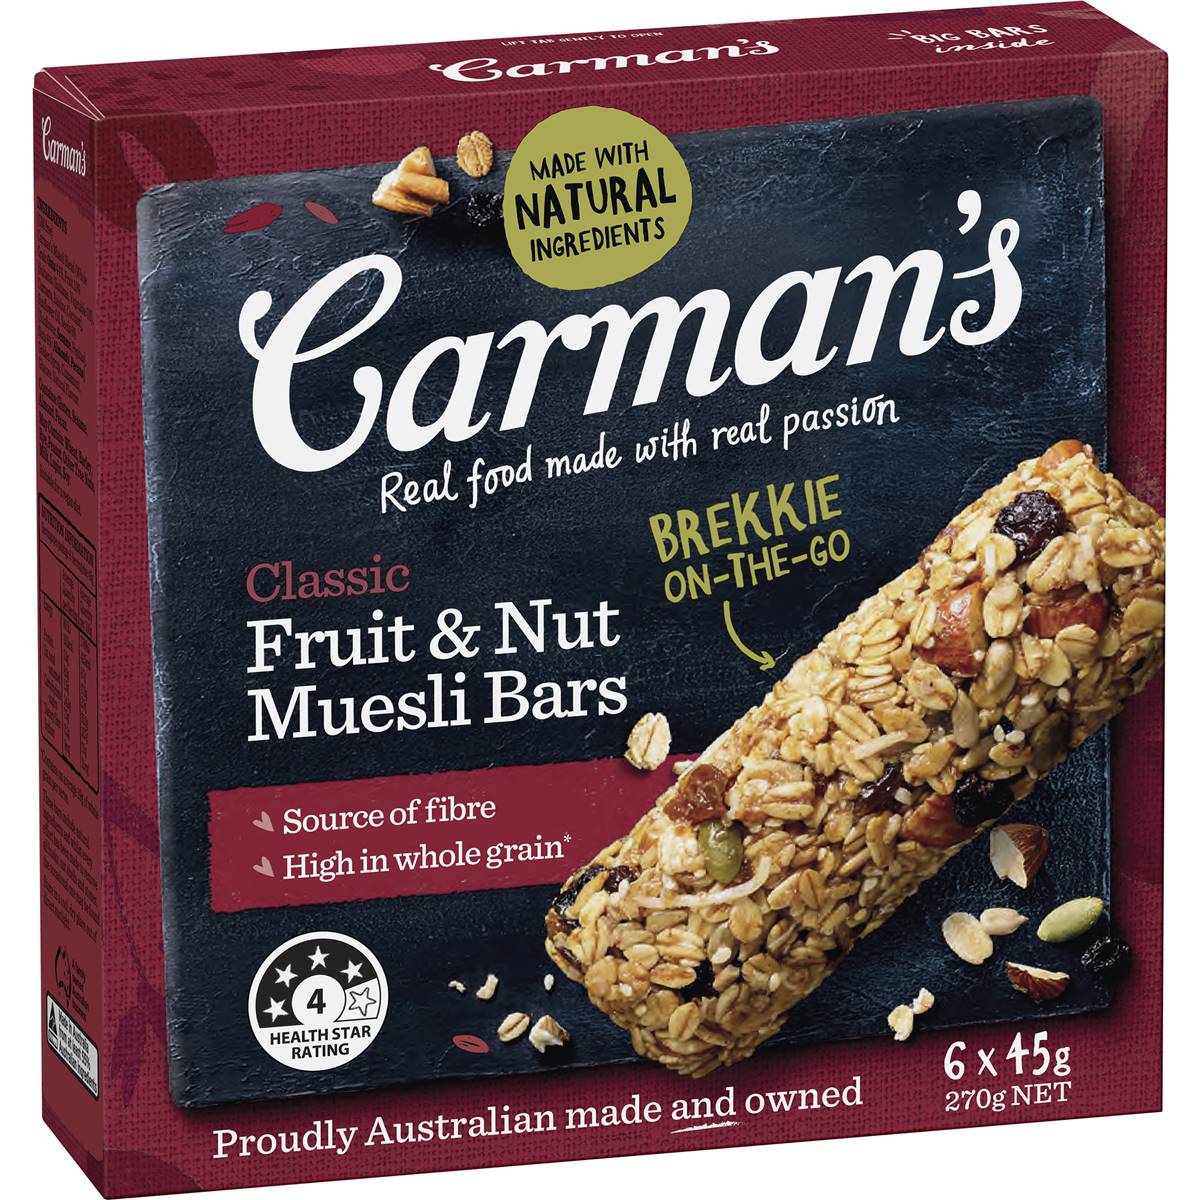 Calories in Carman's Classic Fruit & Nut Muesli Bars